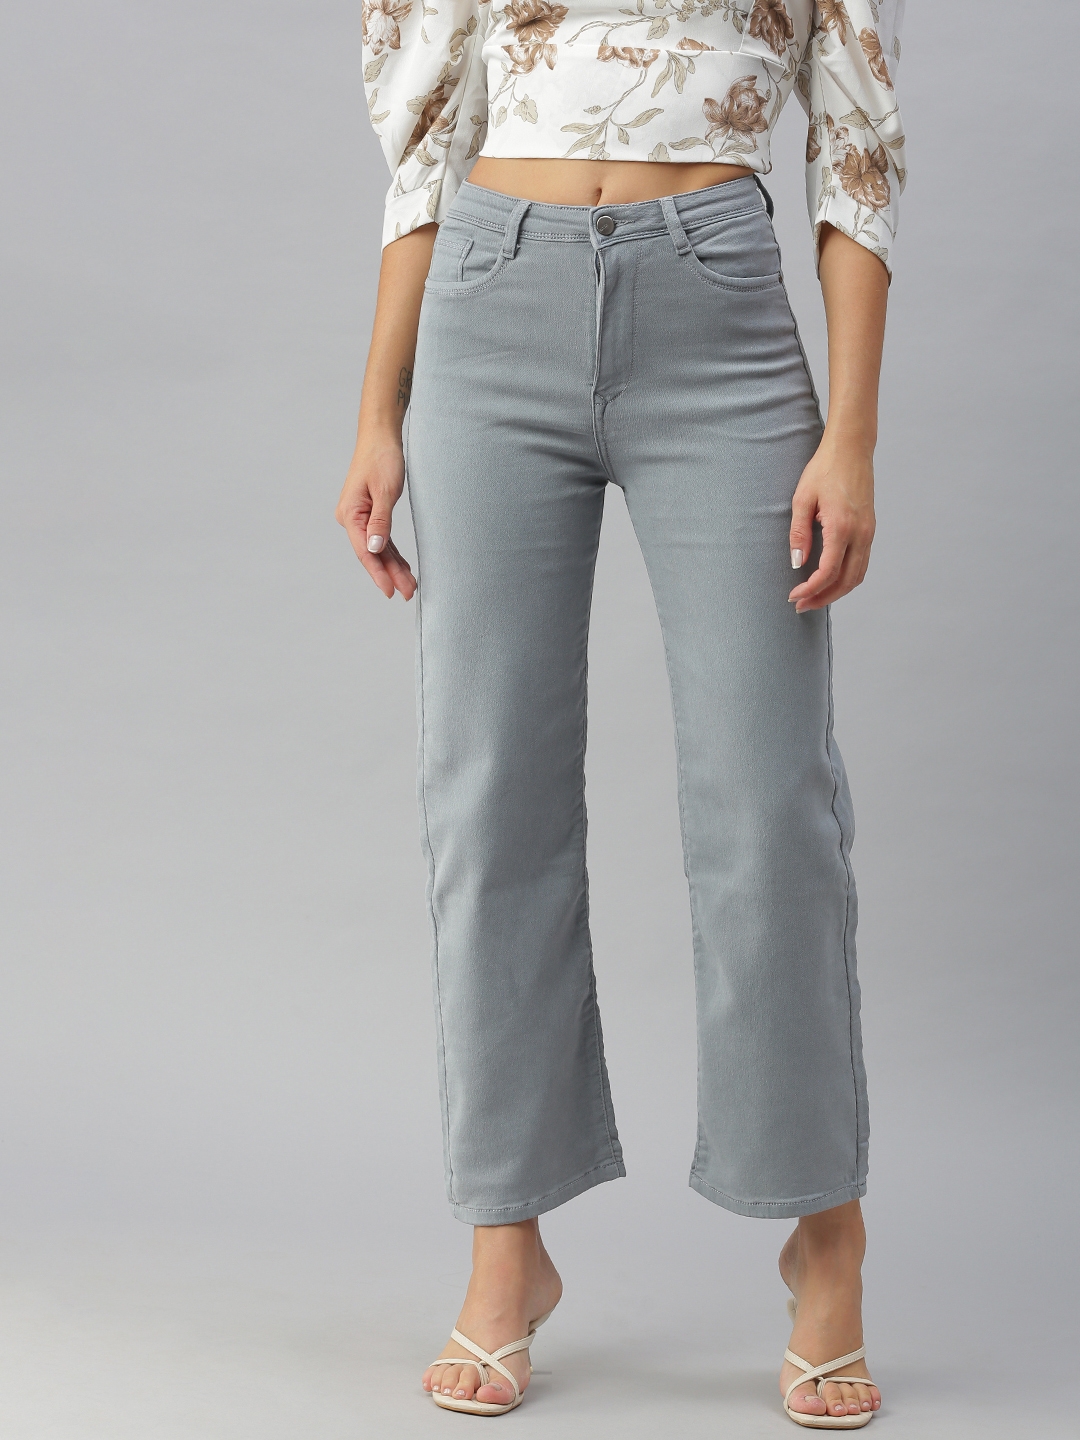 SHOWOFF Women's Clean Look Grey Wide Leg Denim Jeans